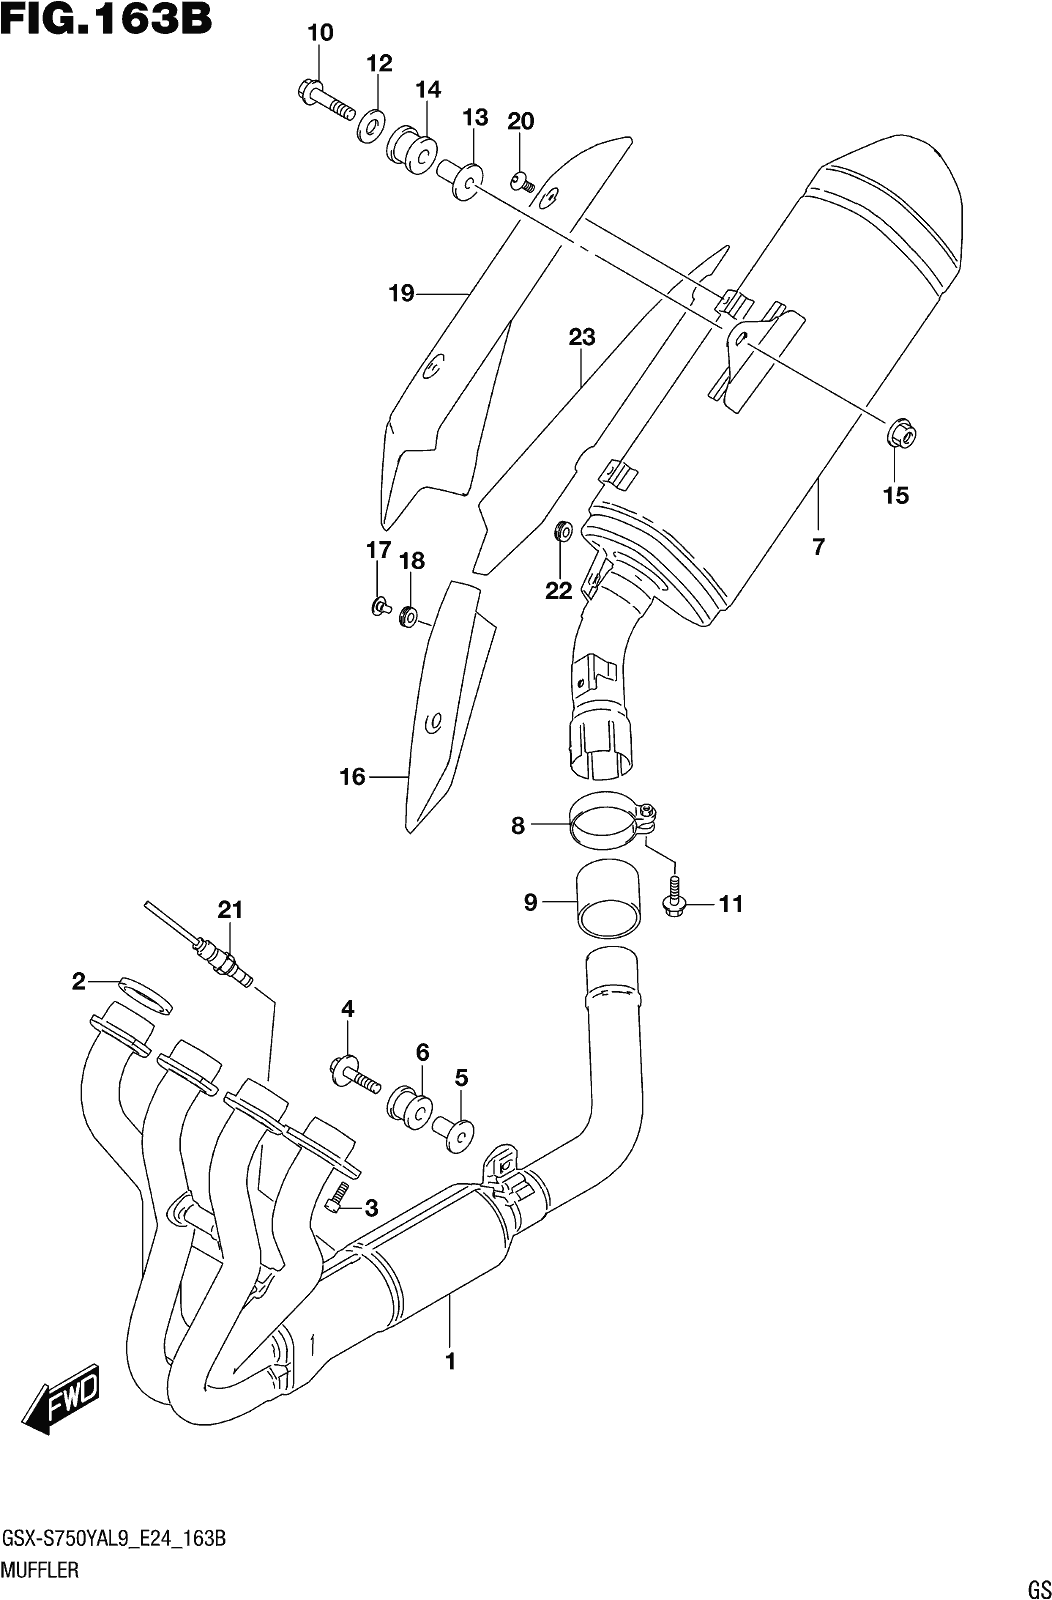 Fig.163b Muffler (gsx-s750zal9 E24)